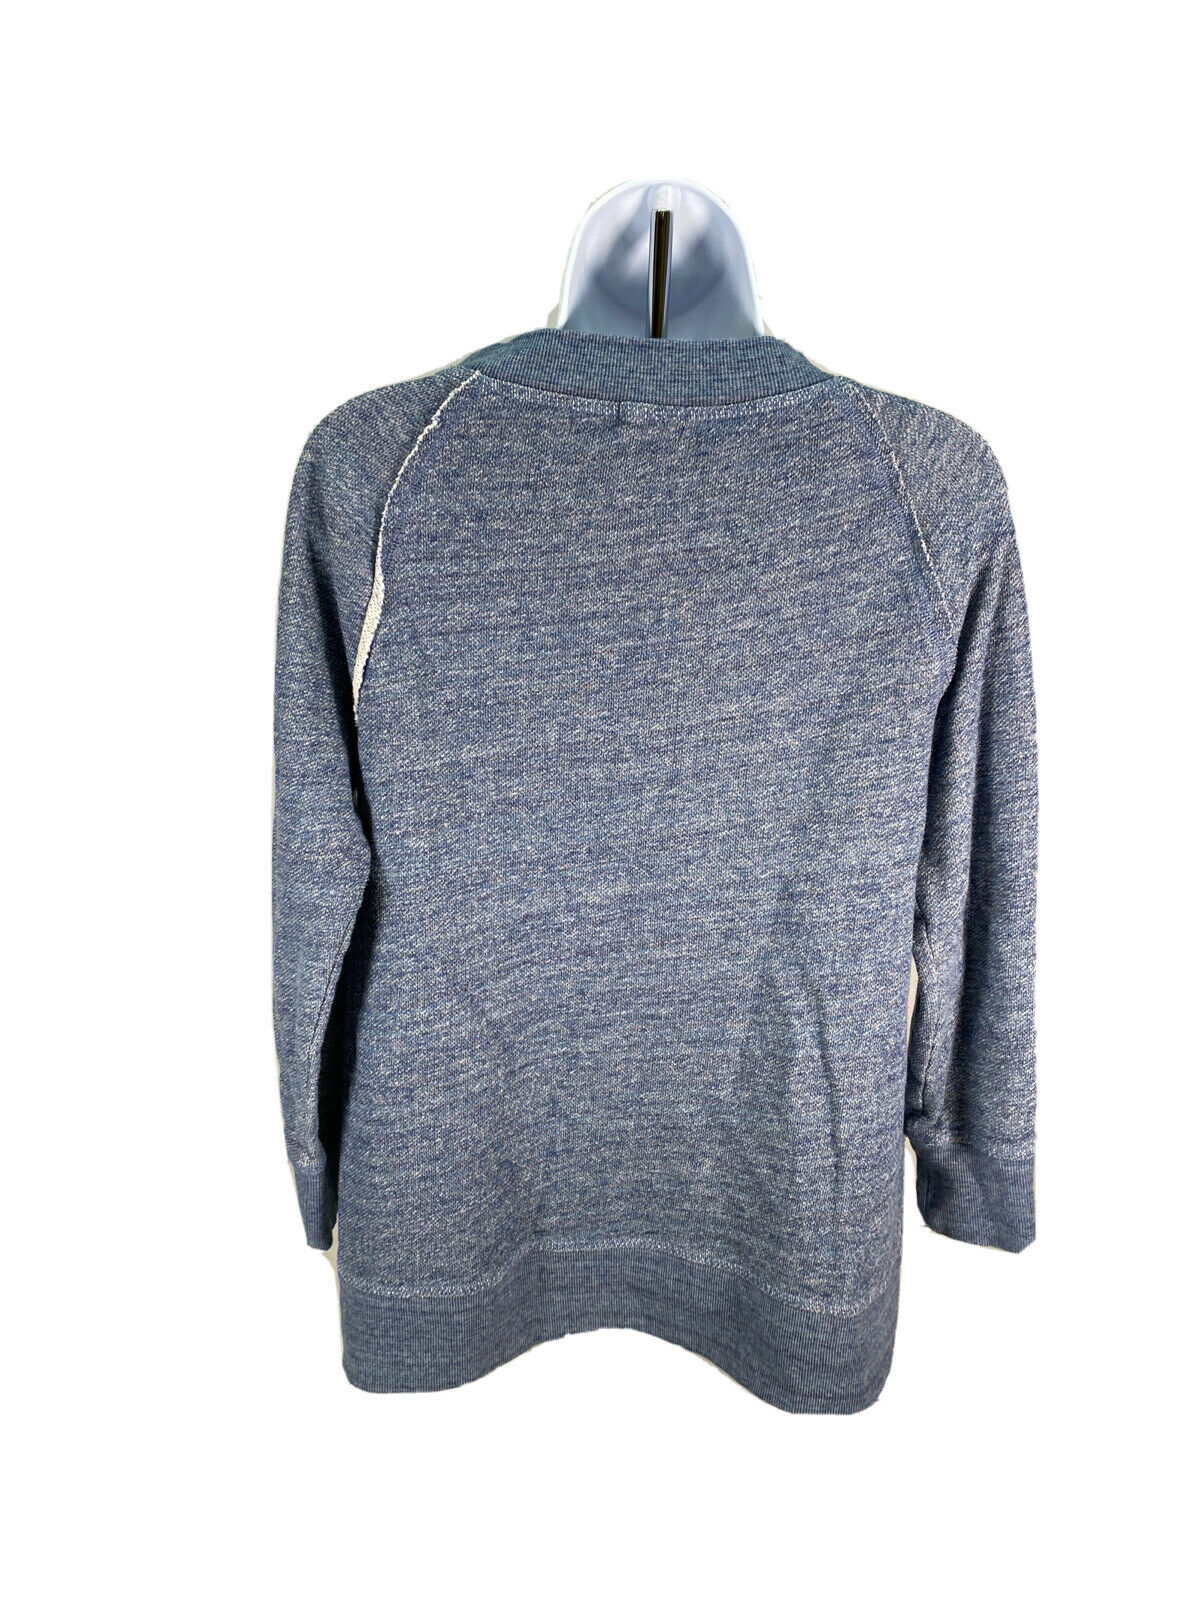 Caslon Women's Blue Terry Knit 3/4 Sleeve Pullover Sweatshirt Sz Petite S